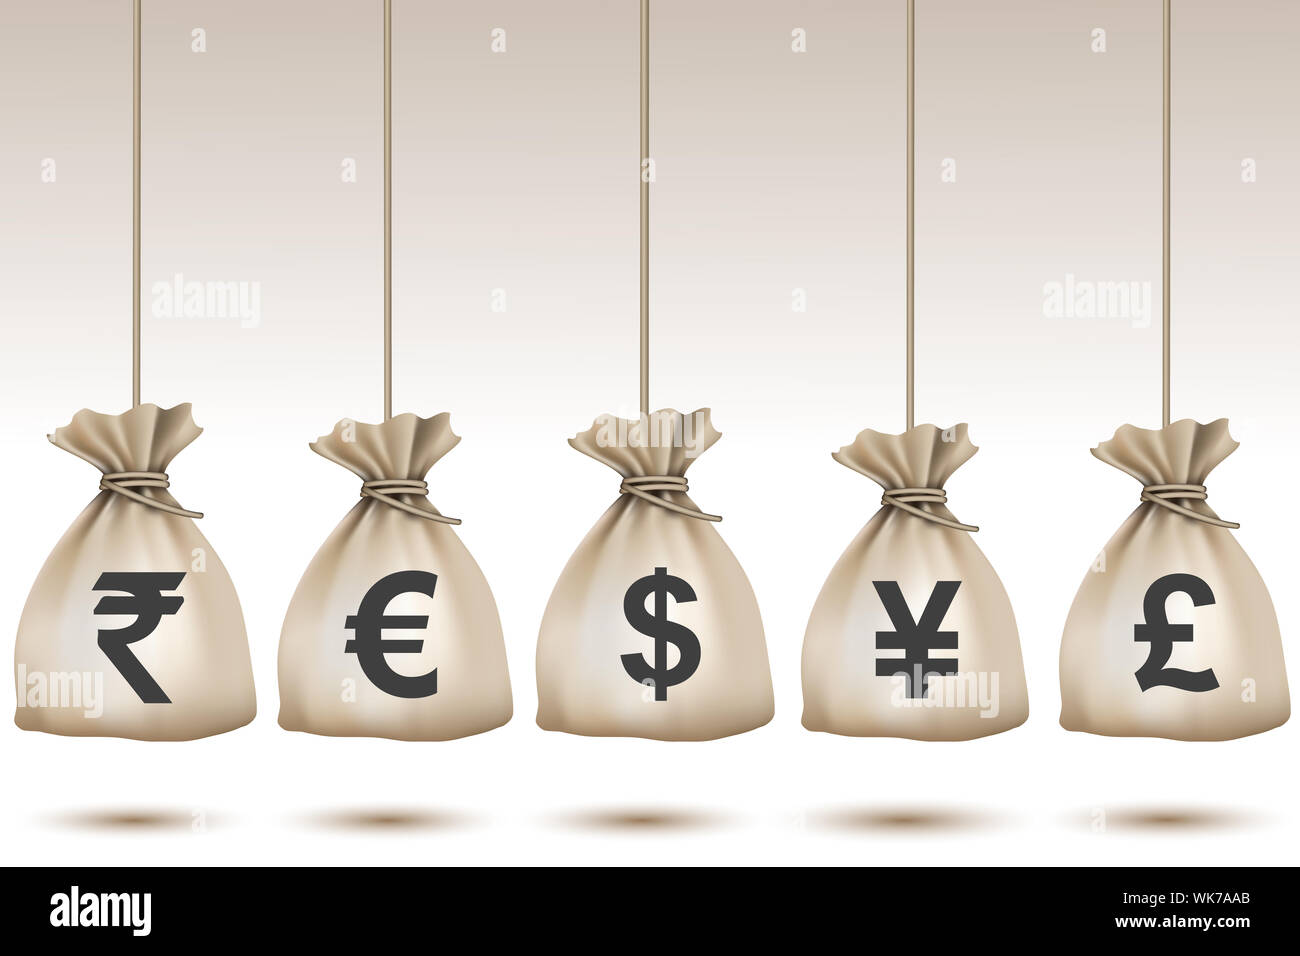 illustration of hanging money bags Stock Photo